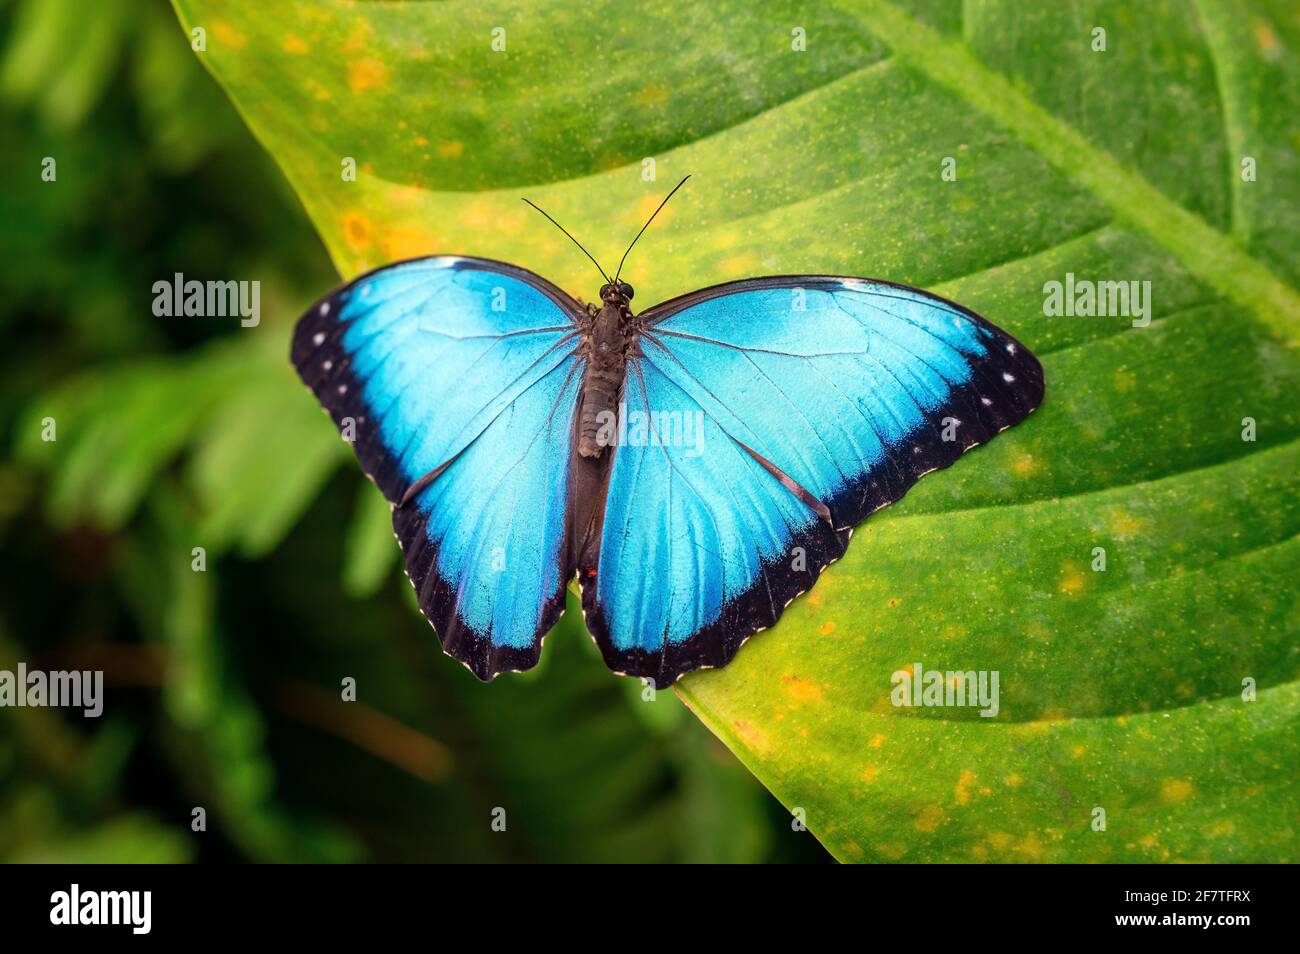 Blauer Morpho-Schmetterling (Morpho menelaus) auf einem Blatt, Mindo-Nebelwald, Ecuador. Stockfoto